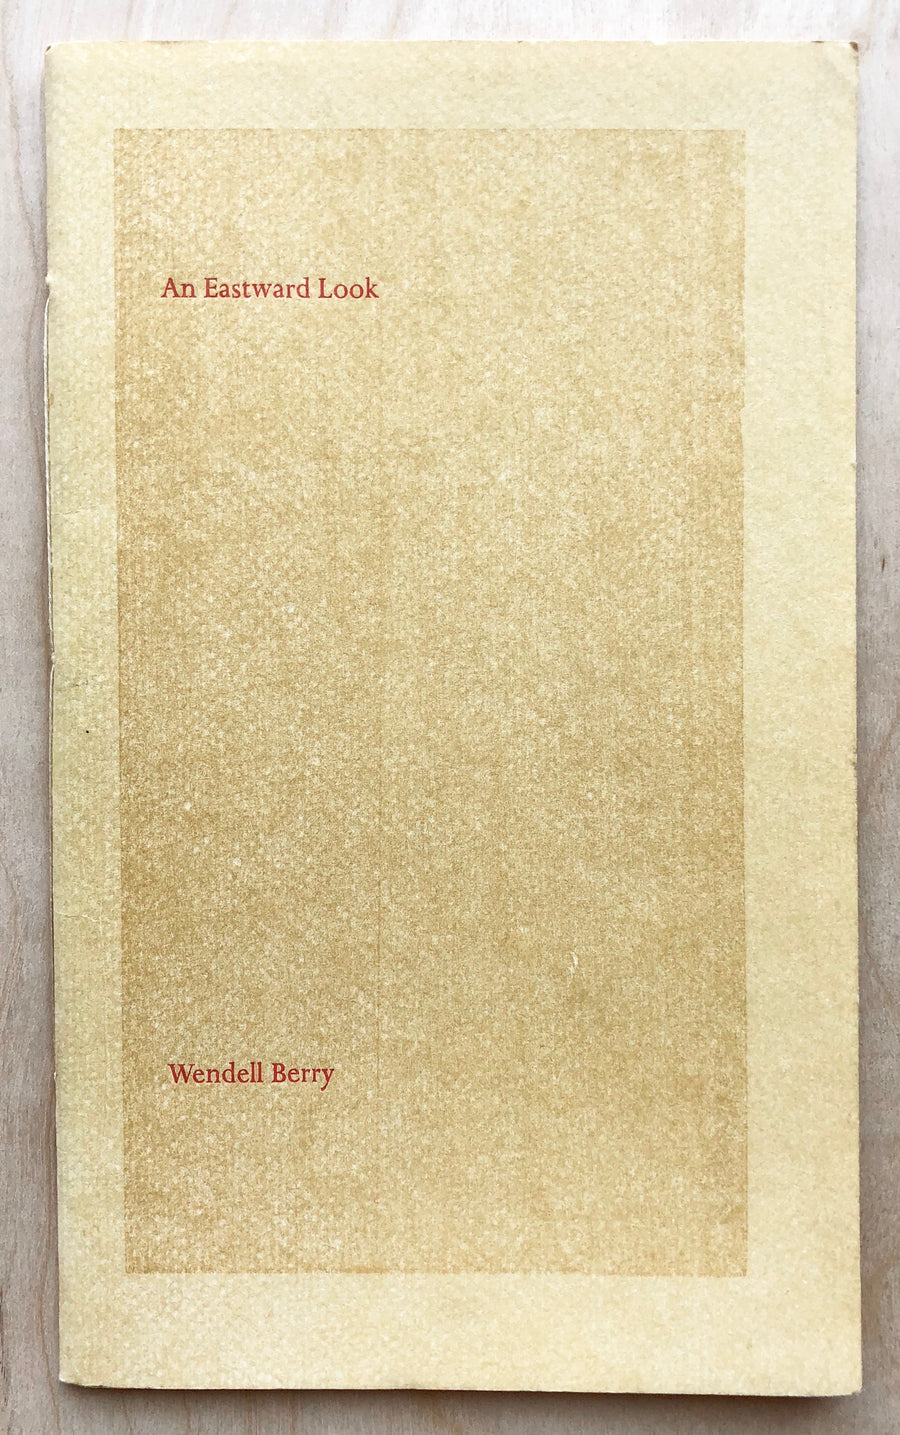 AN EASTWARD LOOK by Wendell Berry